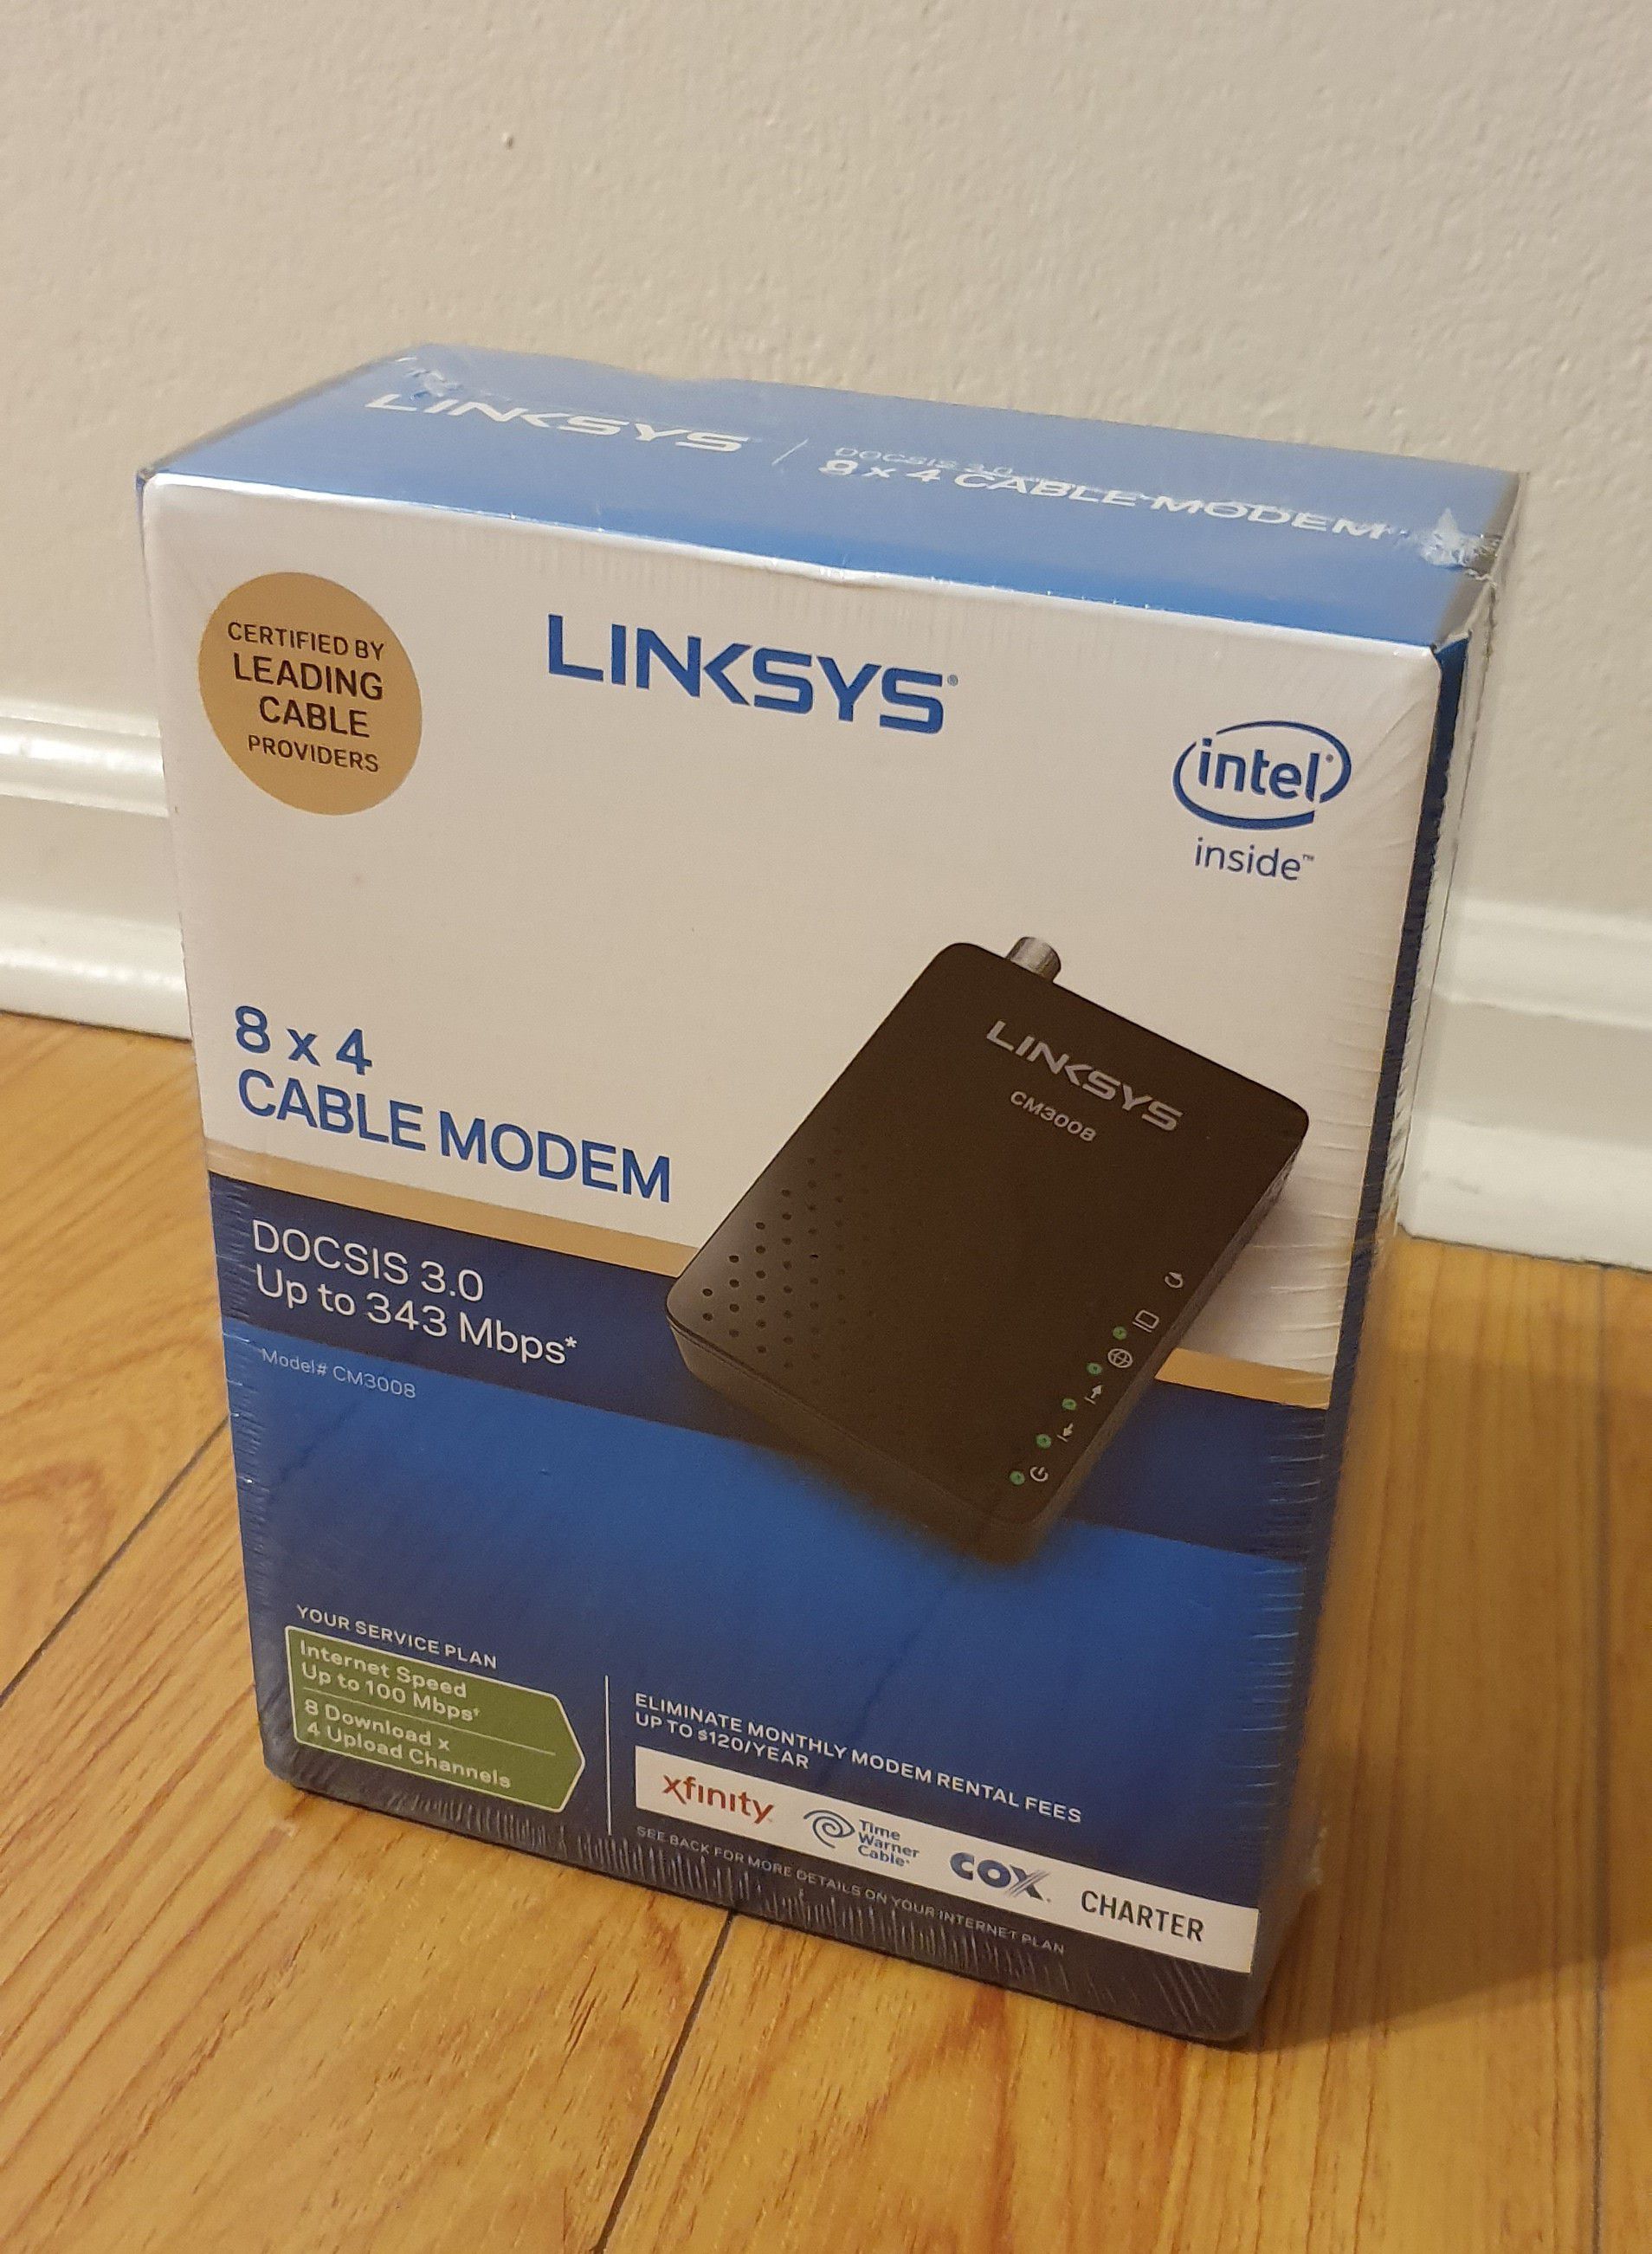 Brand new Linksys cable modem DOCSIS 3.0 8x4 CM3008 (Comcast Xfinity, Spectrum, Cox)